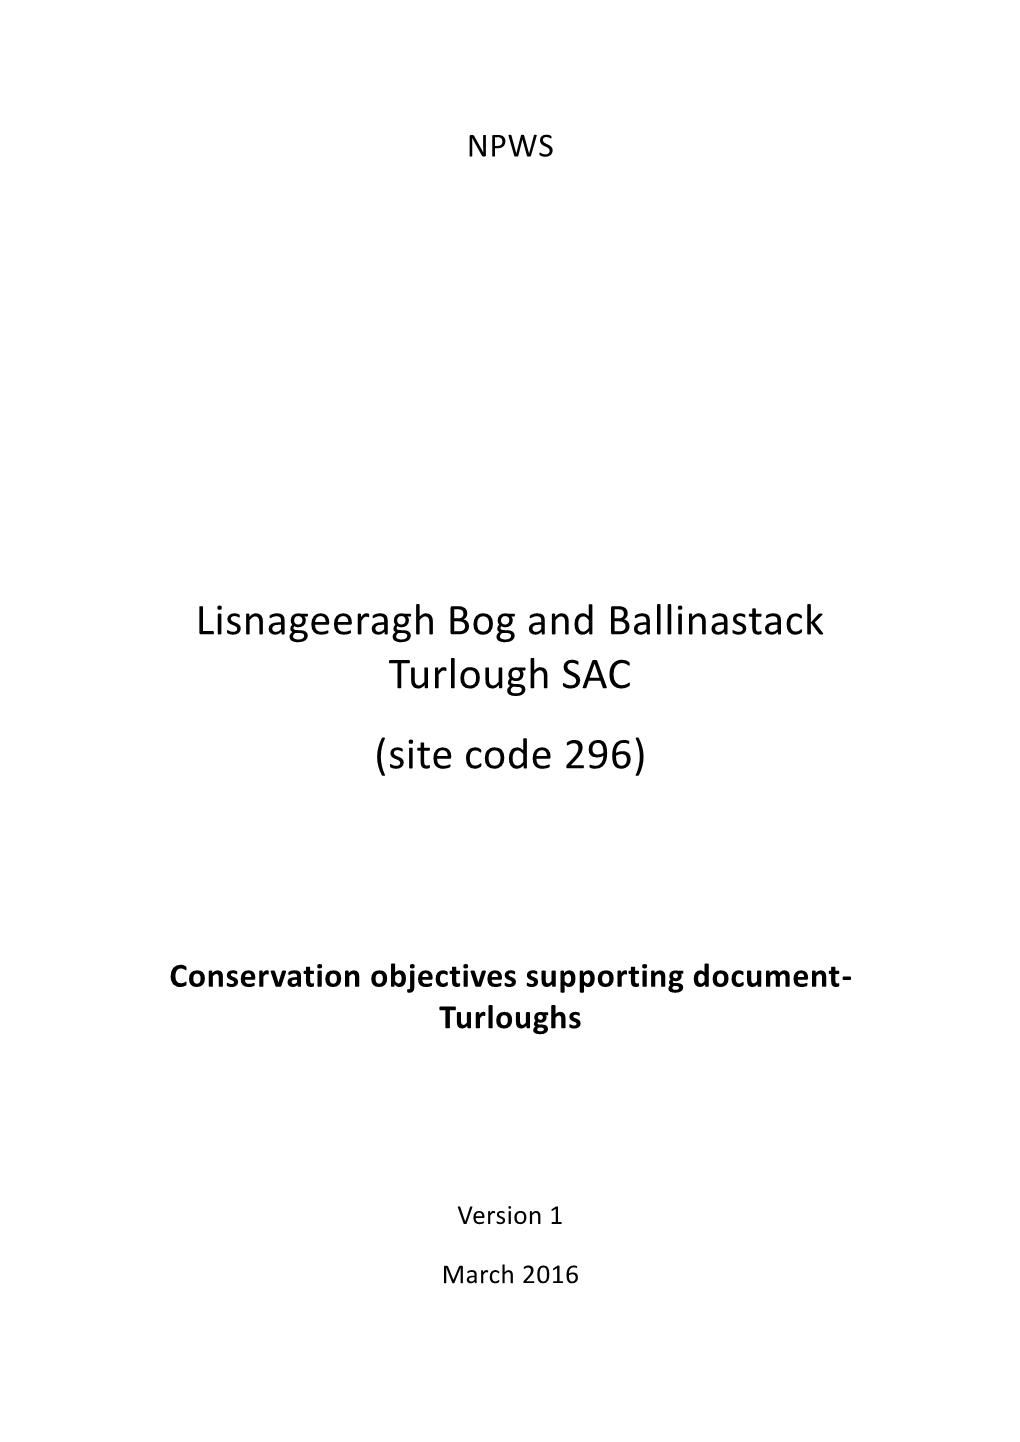 Lisnageeragh Bog and Ballinastack Turlough SAC (Site Code 296)